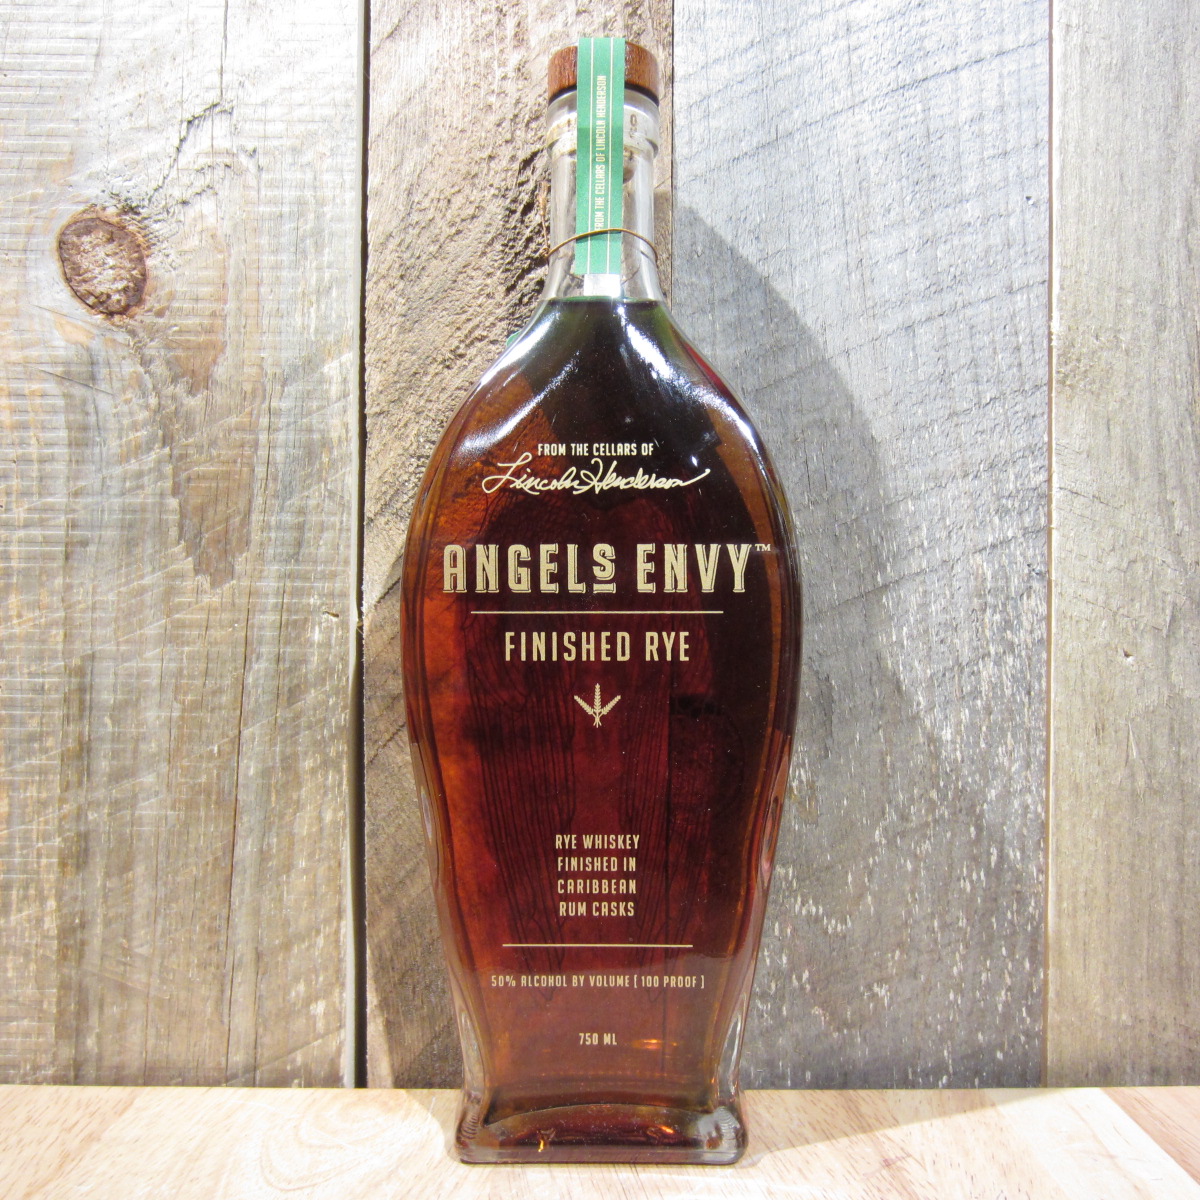 Angel's Envy Rye Whiskey Finished in Caribbean Rum Casks